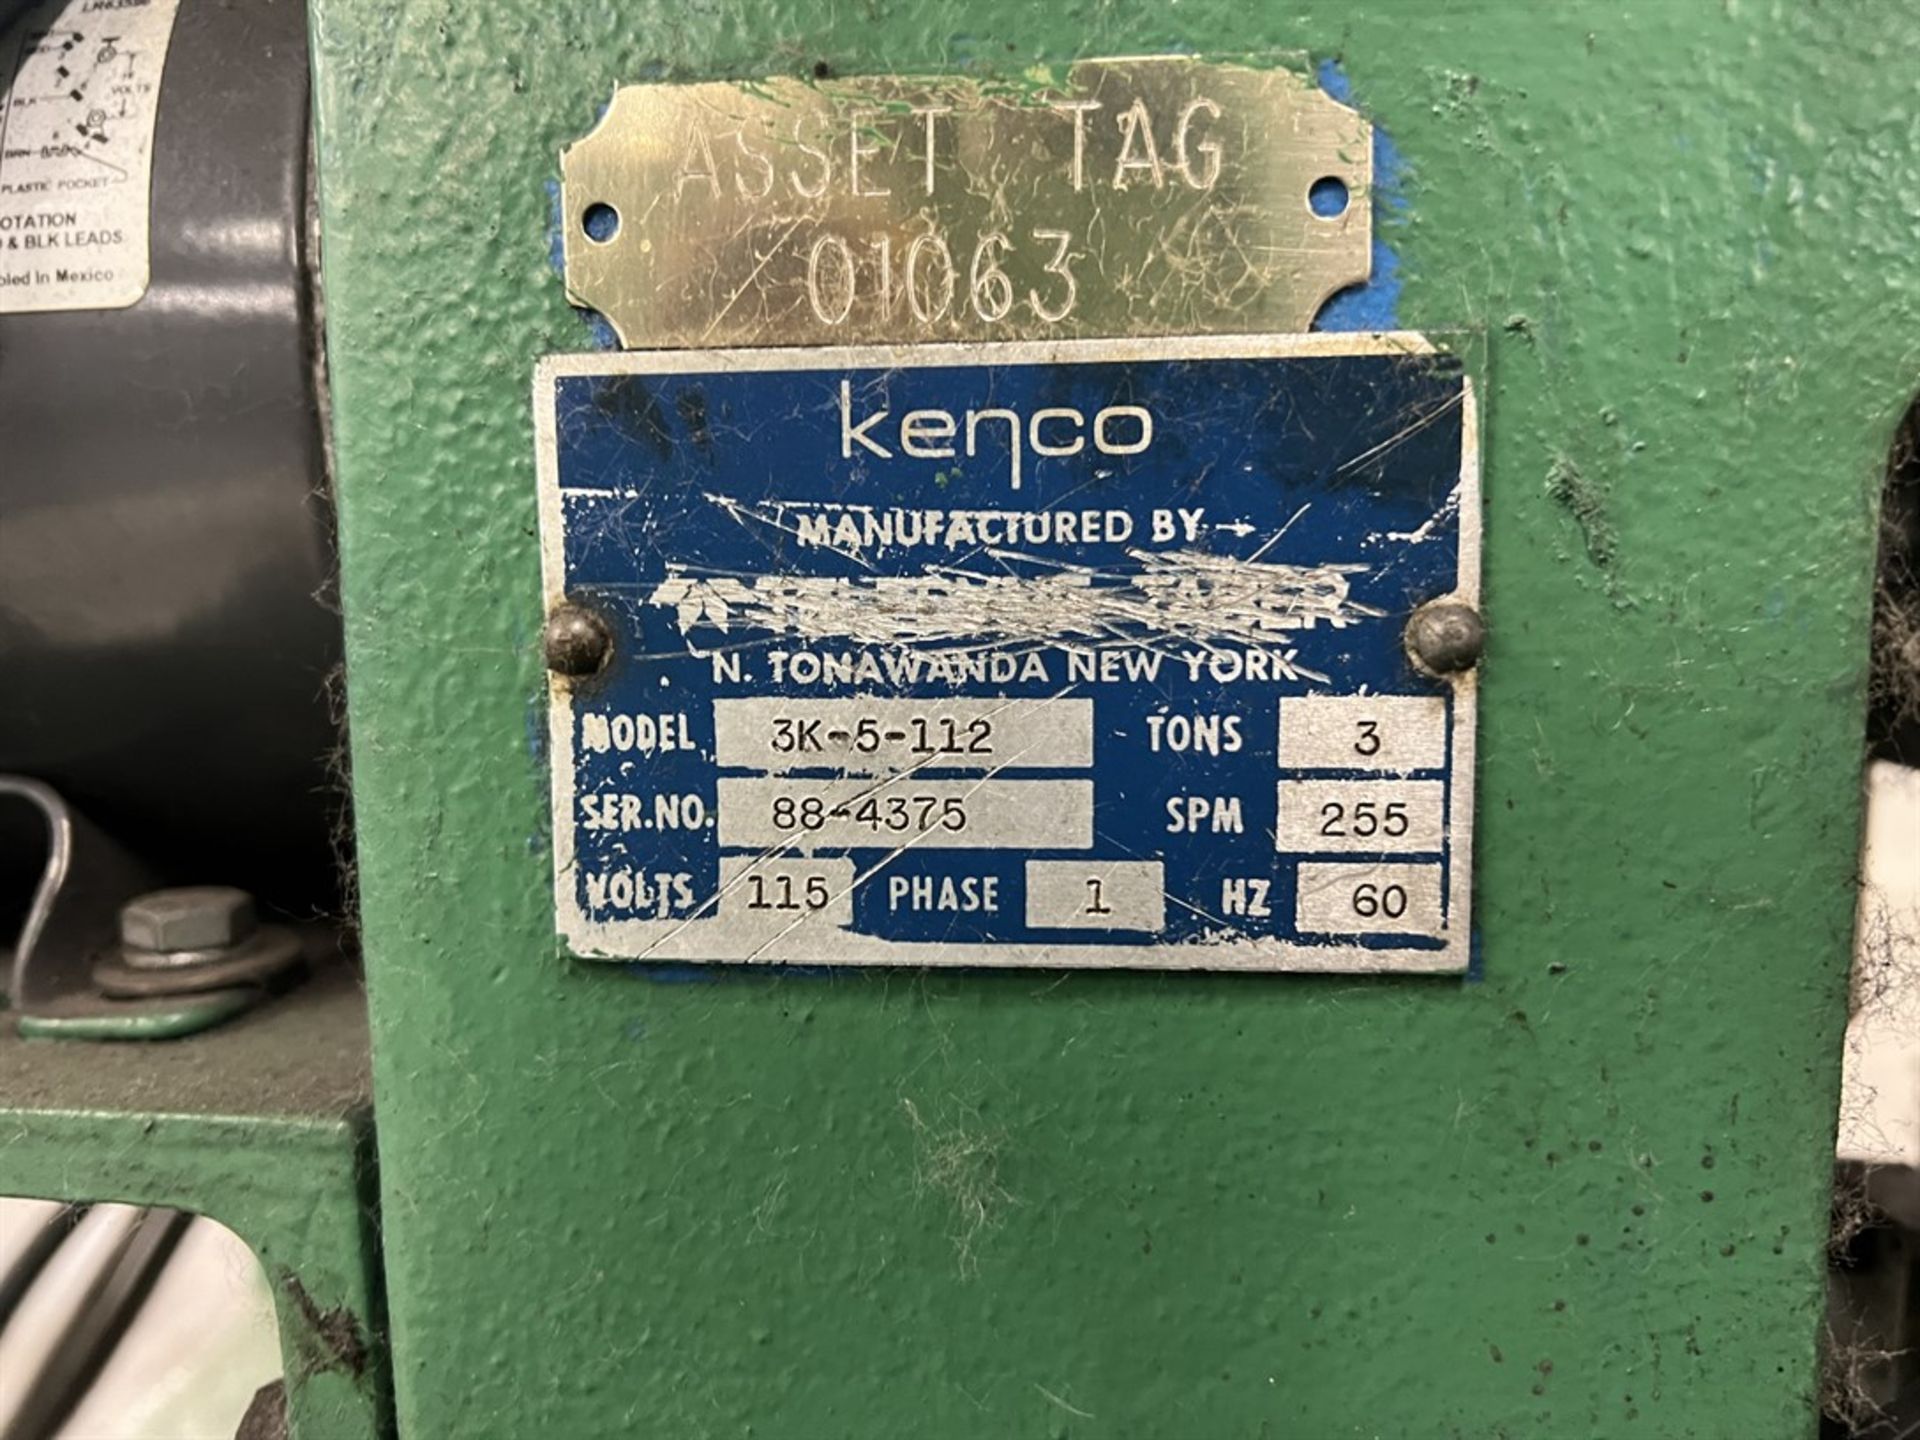 KENCO 3K-5-112 Terminal Press, s/n 88-4375 - Image 3 of 3